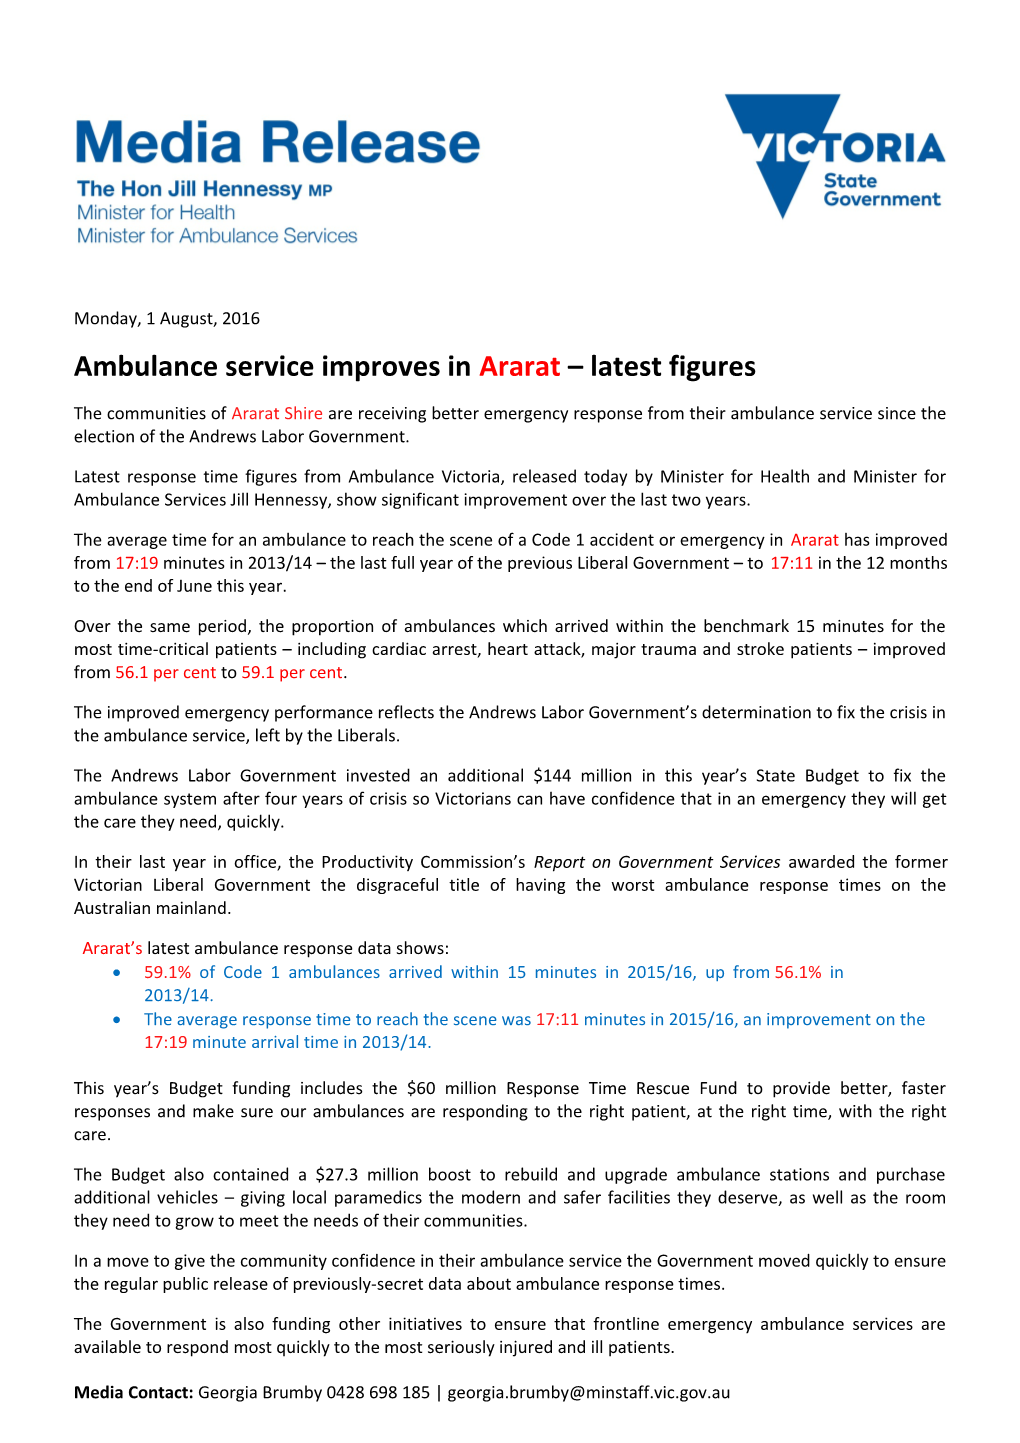 Ambulance Service Improves in Ararat Latest Figures